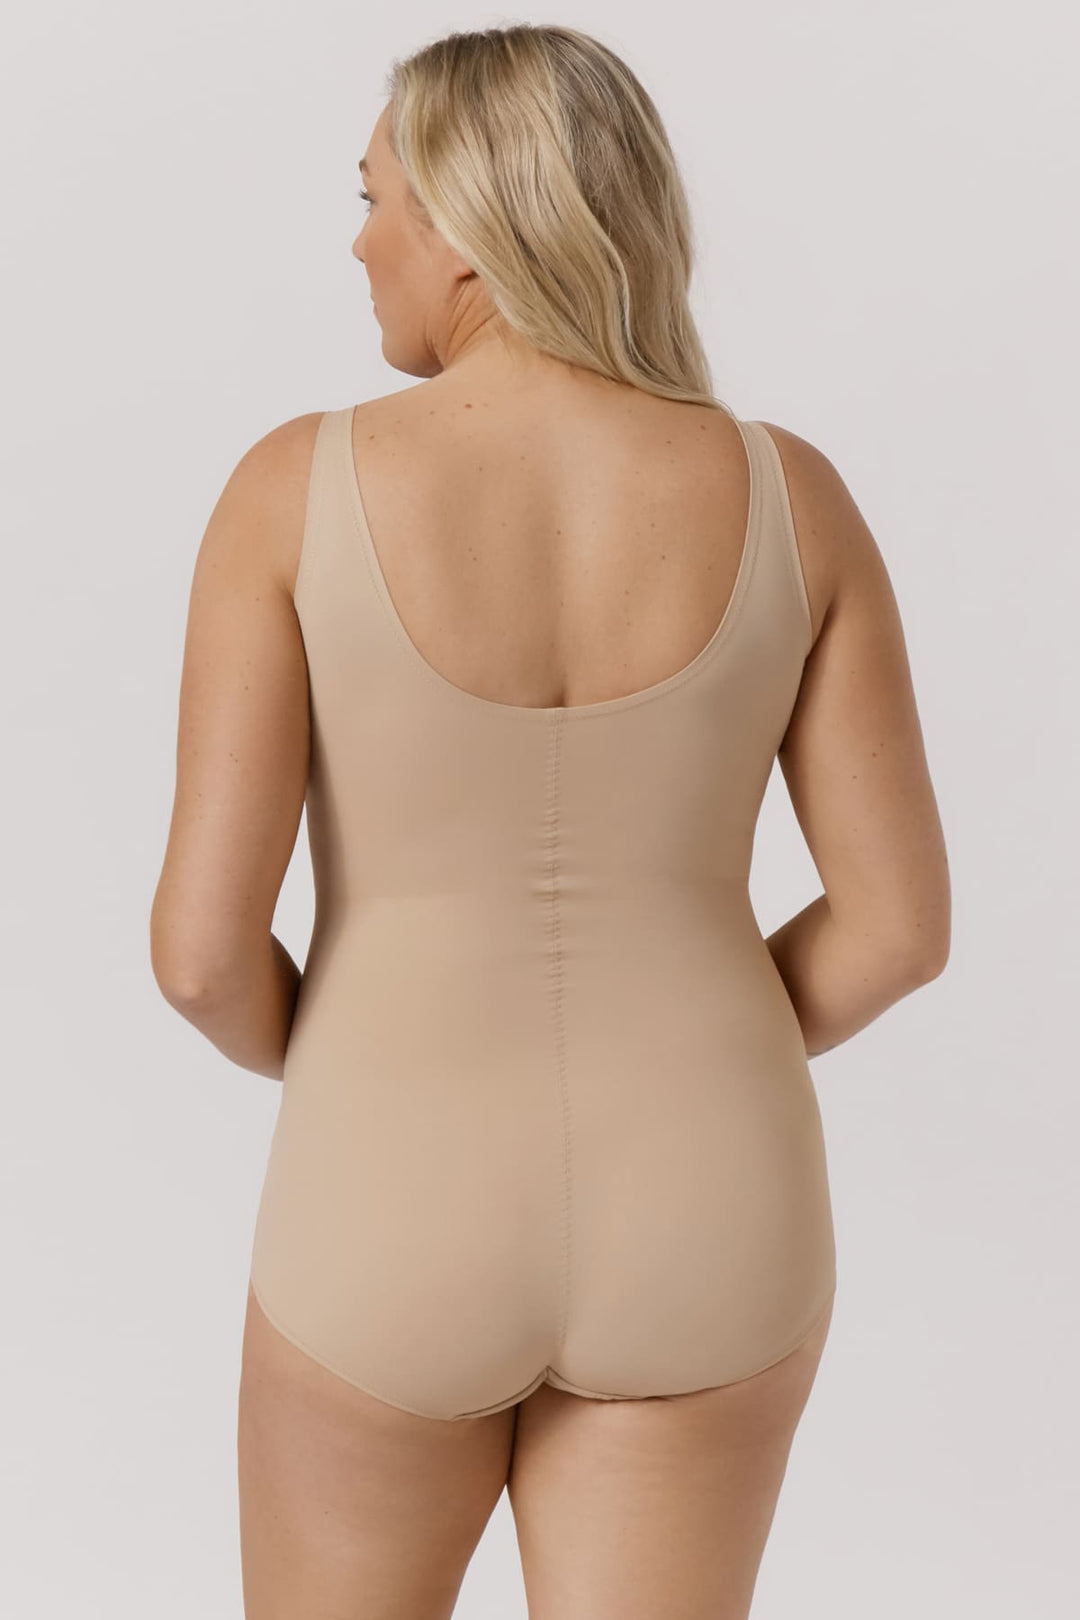 Body Wrap Plus Size Firm Control Bodysuit & Reviews